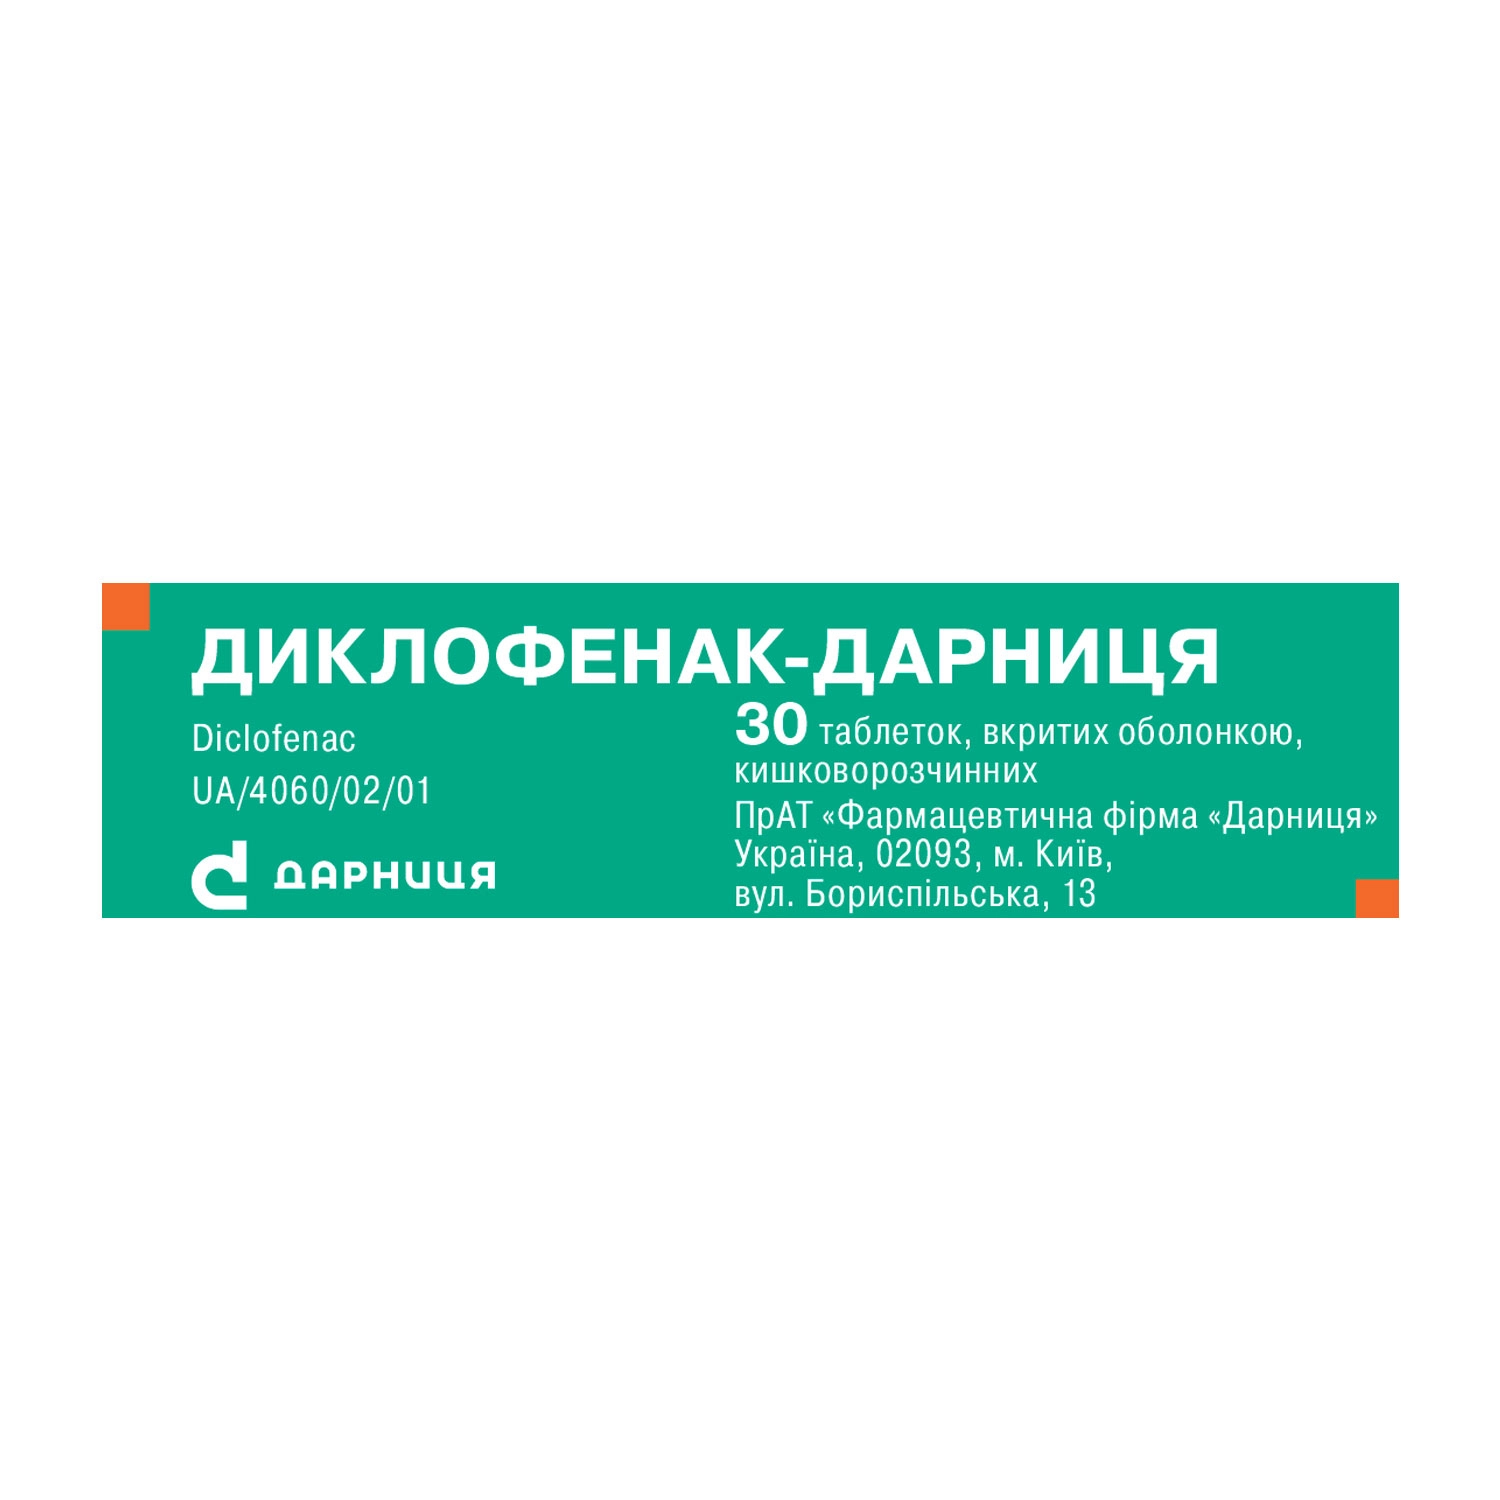 Diclofenac-Darnitsa manufacturer "Darnytsia" pharmaceutical company